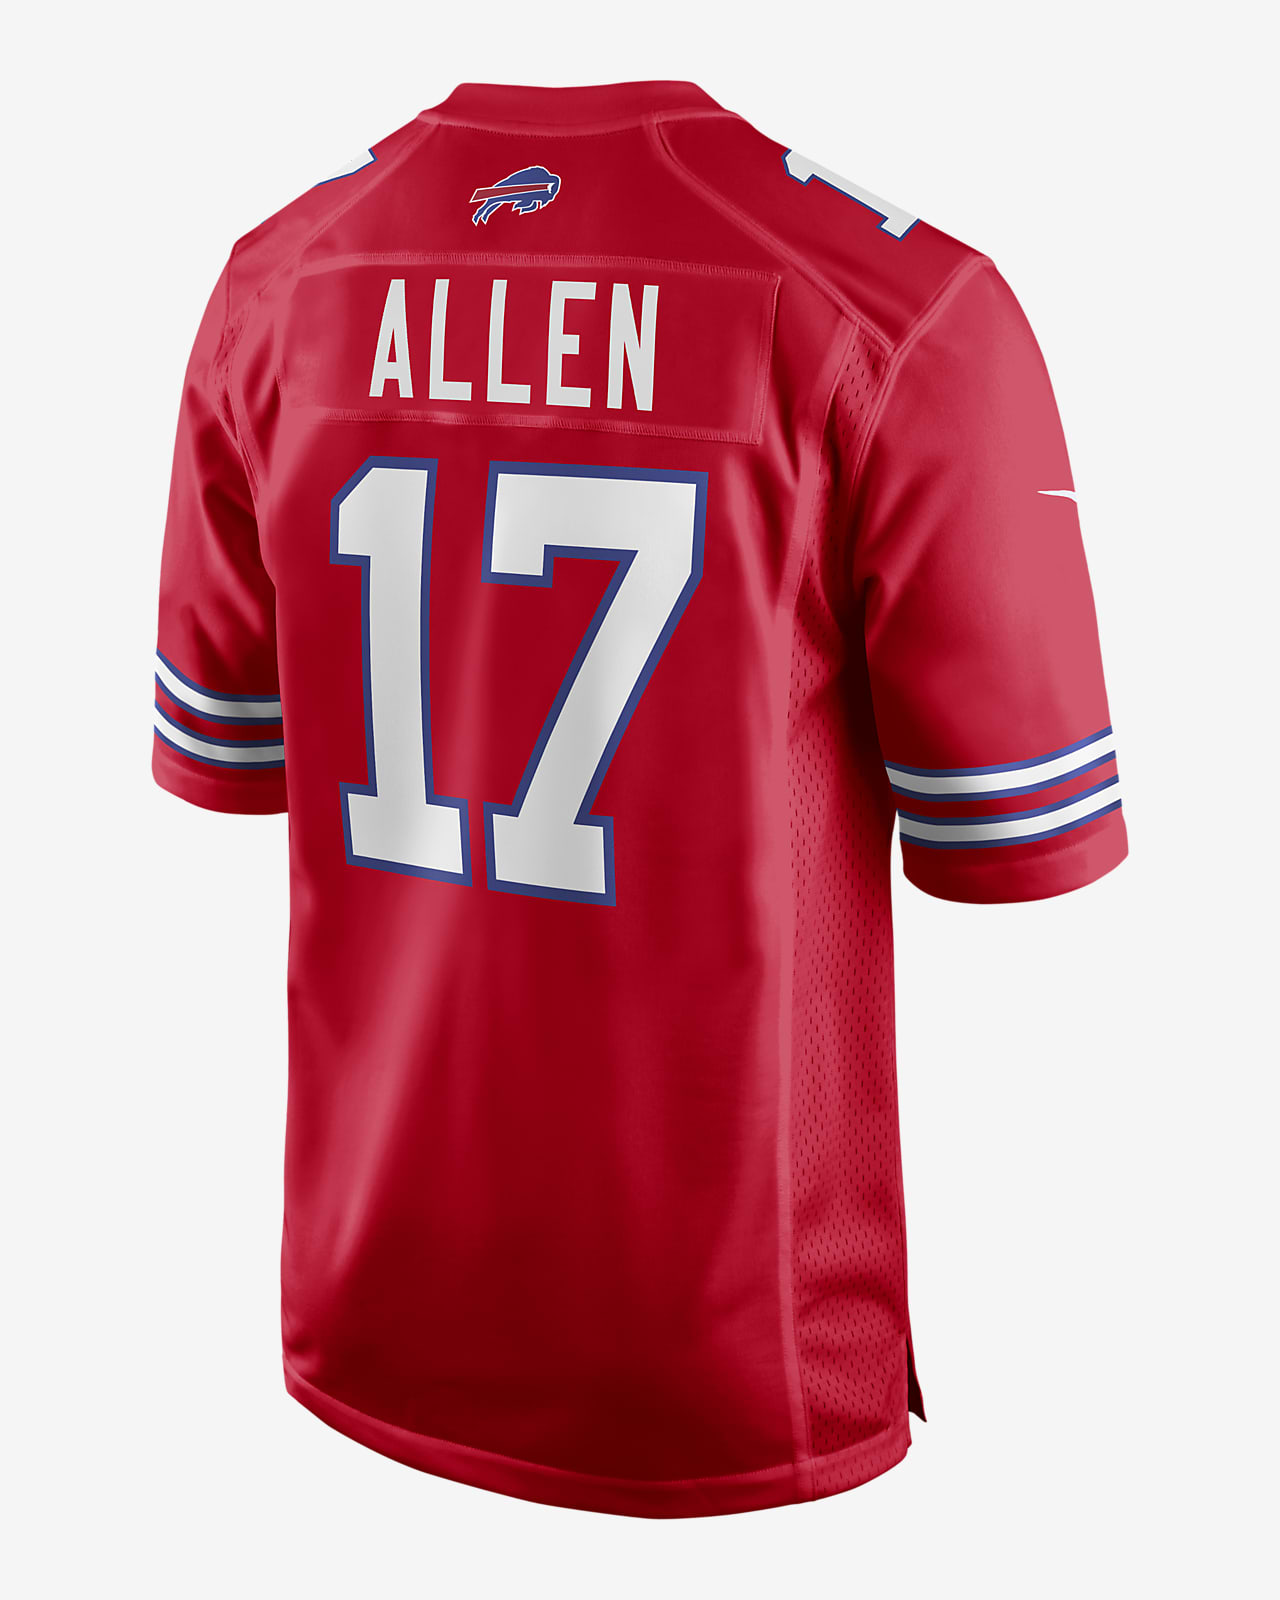 Men's Nike Josh Allen Red Buffalo Bills Alternate Game Jersey, Size: Small